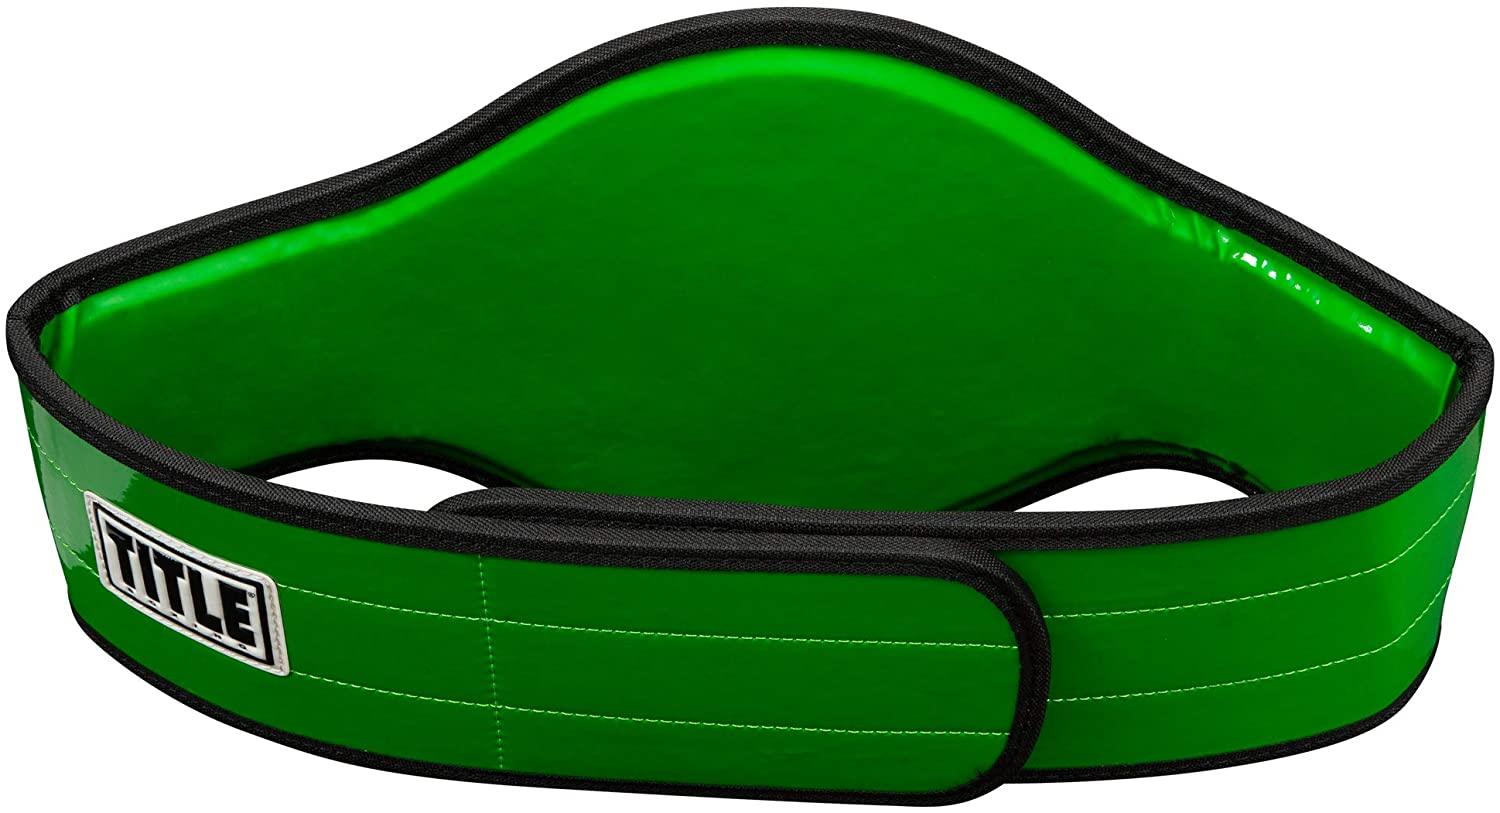 TITLE BOXING GREEN BELT Championship Belt - Zees Belts